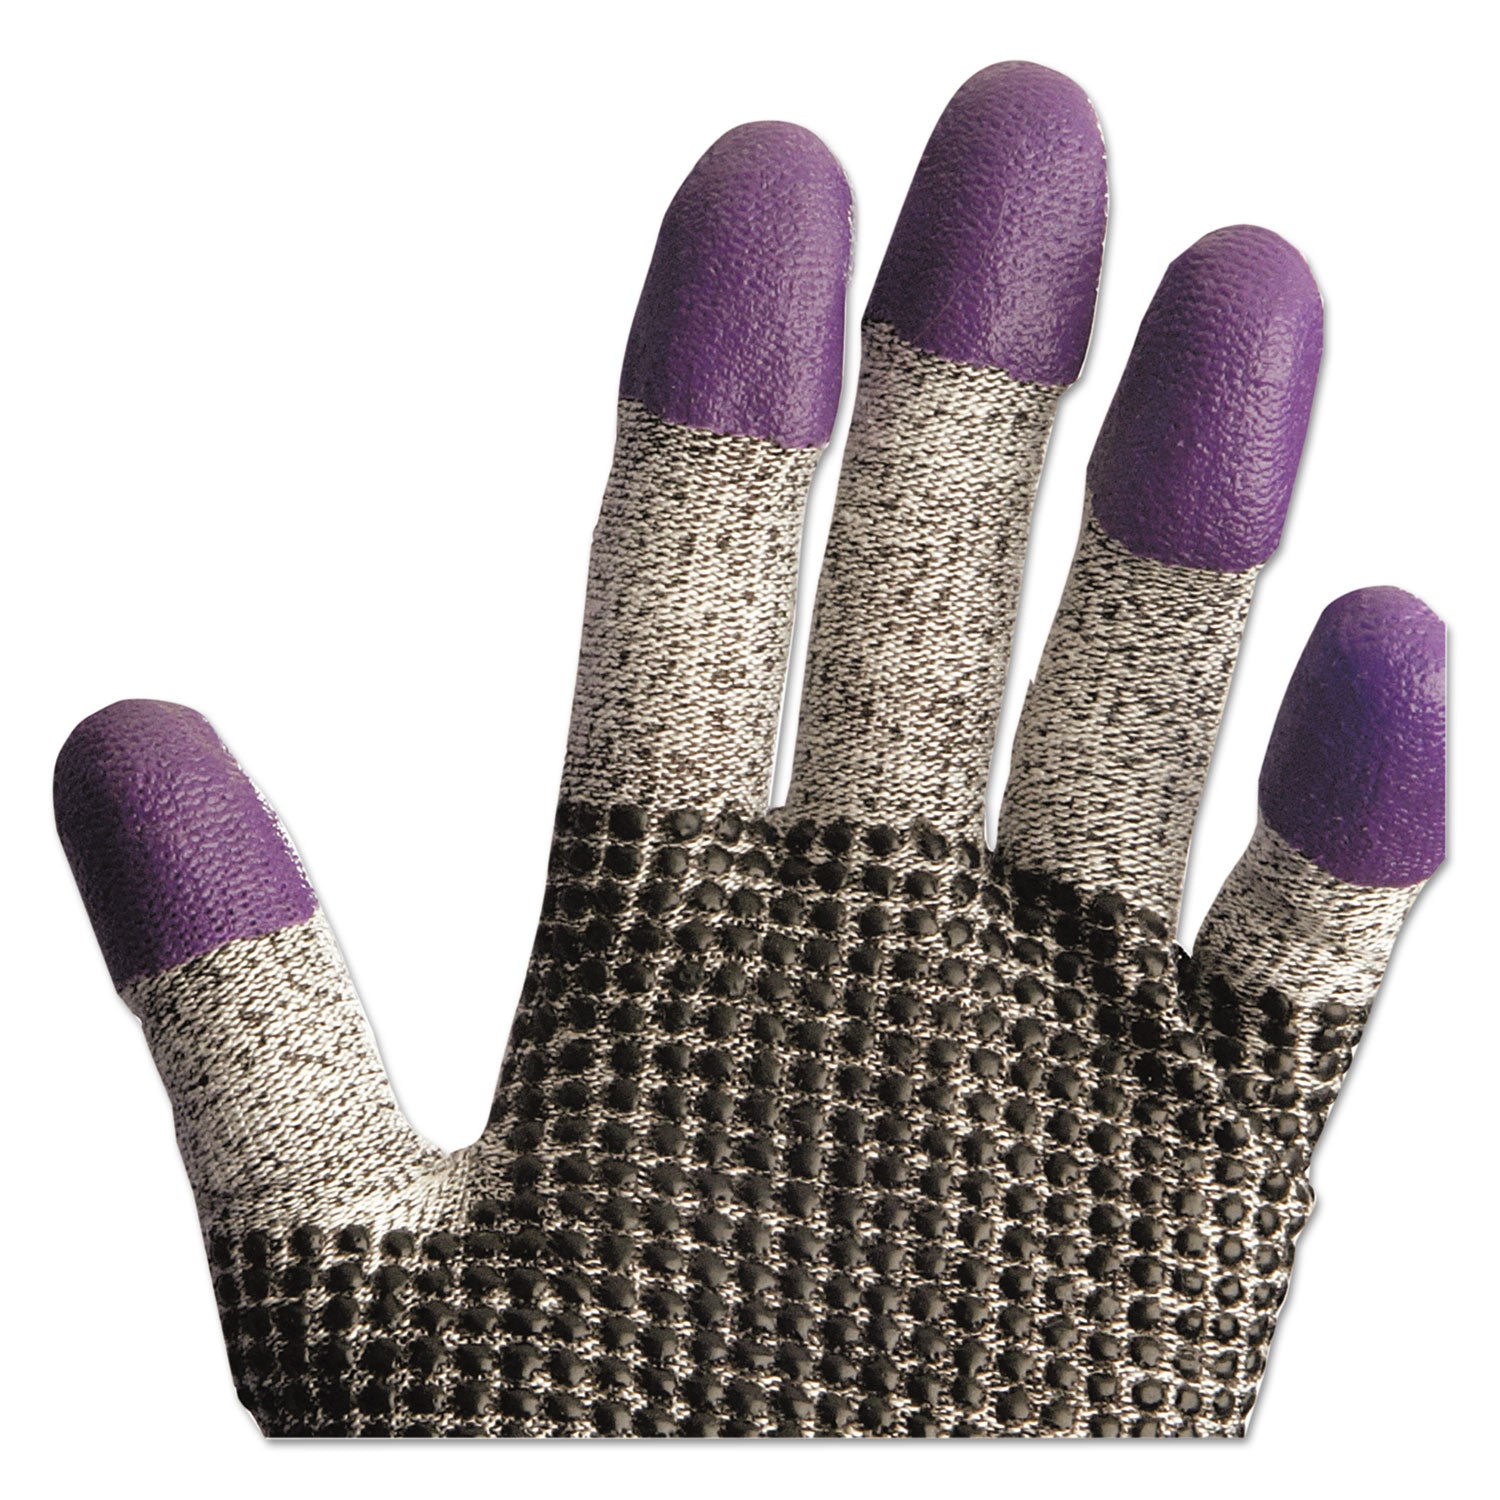 g60-purple-nitrile-cut-resistant-glove-220mm-length-small-size-7-blue-white-pair_kcc97430 - 2